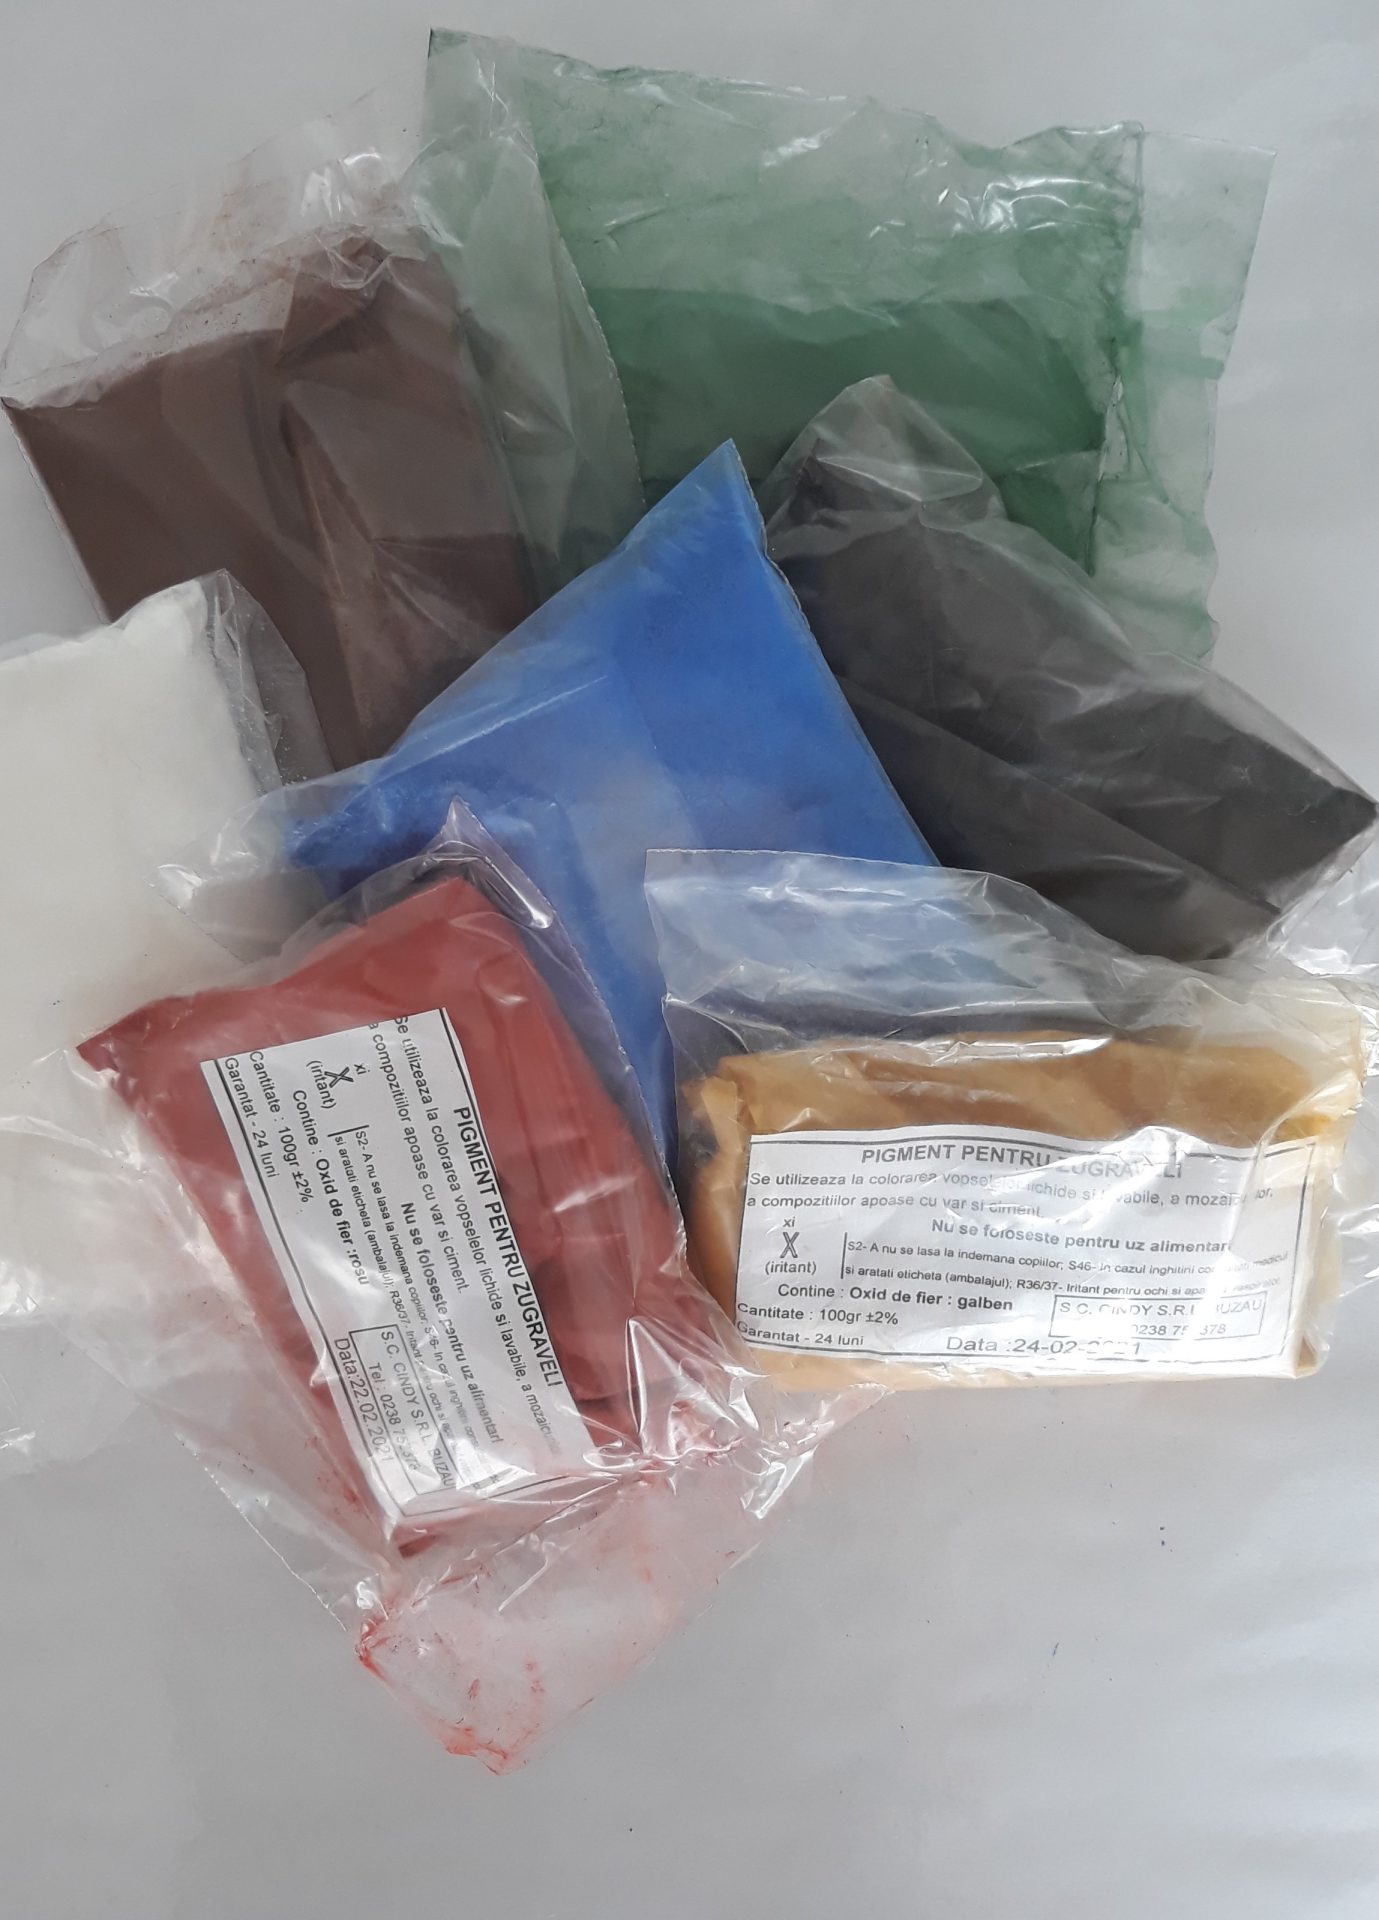 Pigment pentru zugraveli – oxid de fier galben, 100 g